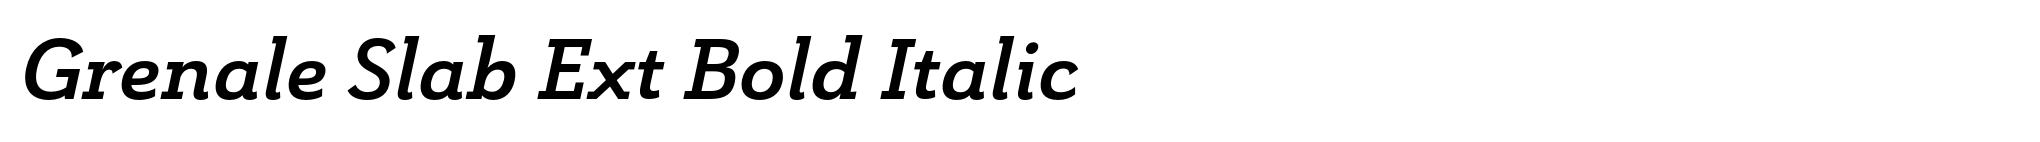 Grenale Slab Ext Bold Italic image